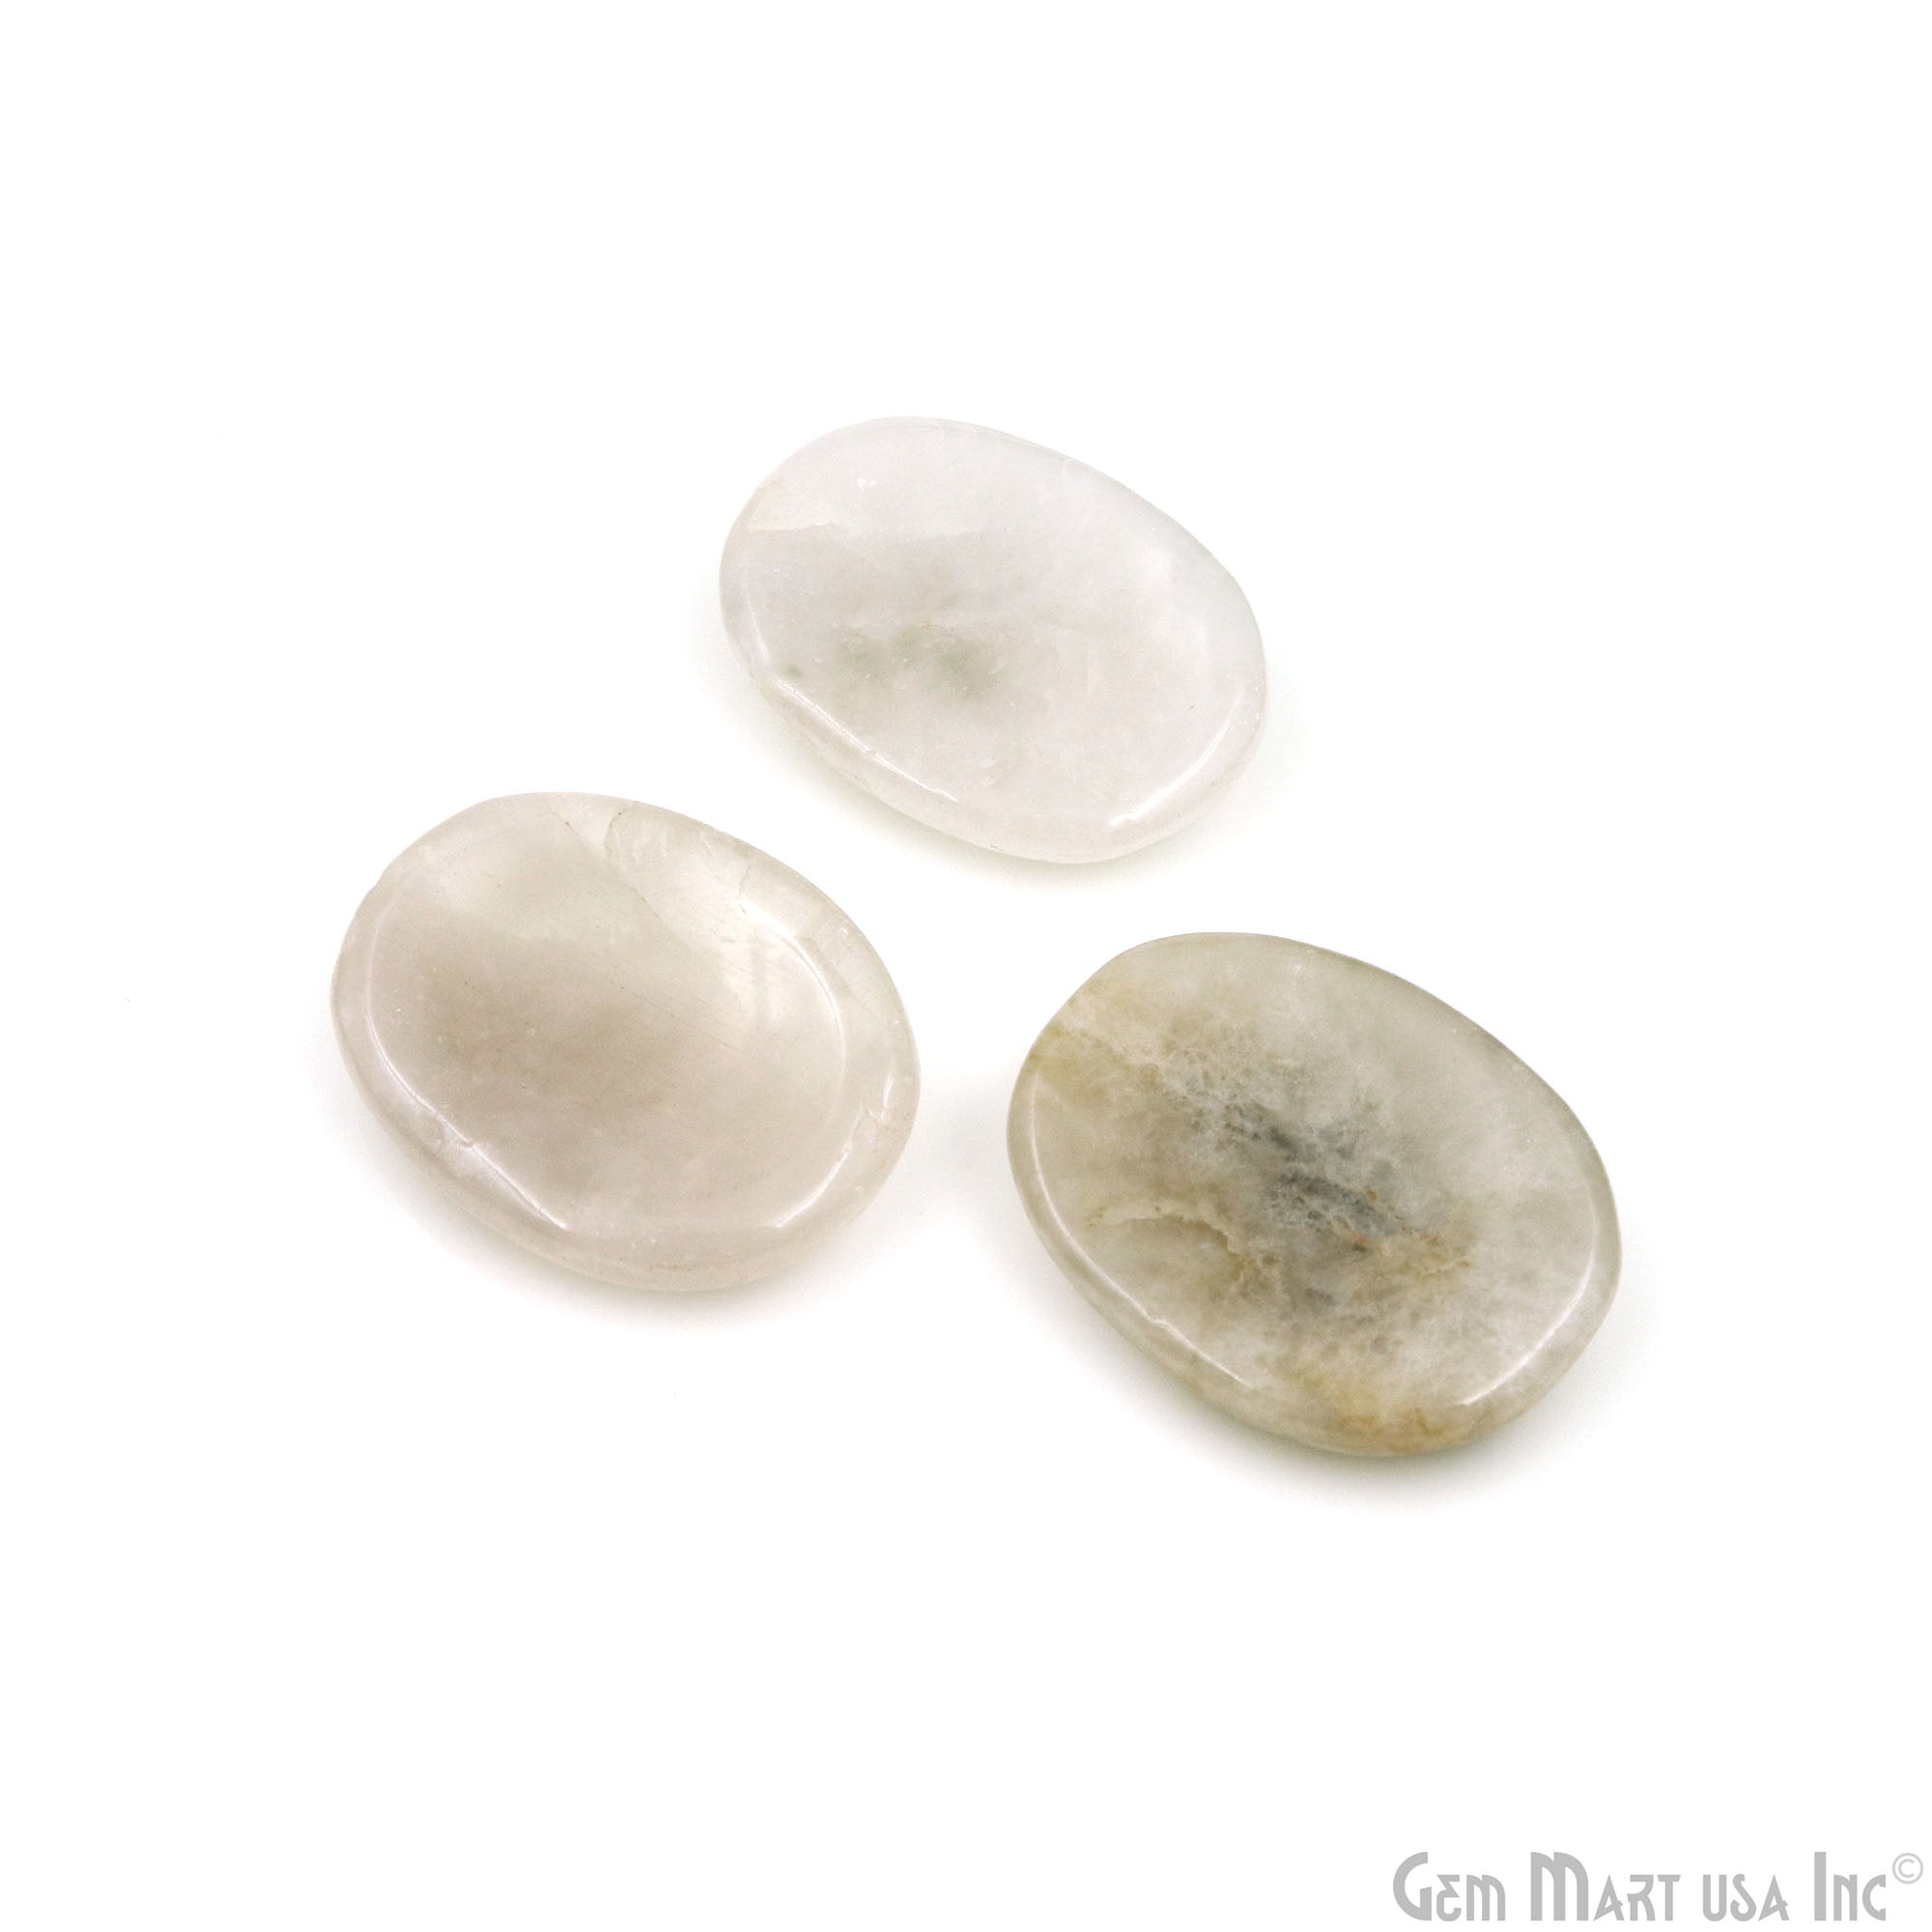 Thumb Meditation Gemstones 39x29mm Oval Hand Curved Thumb Massager Stones